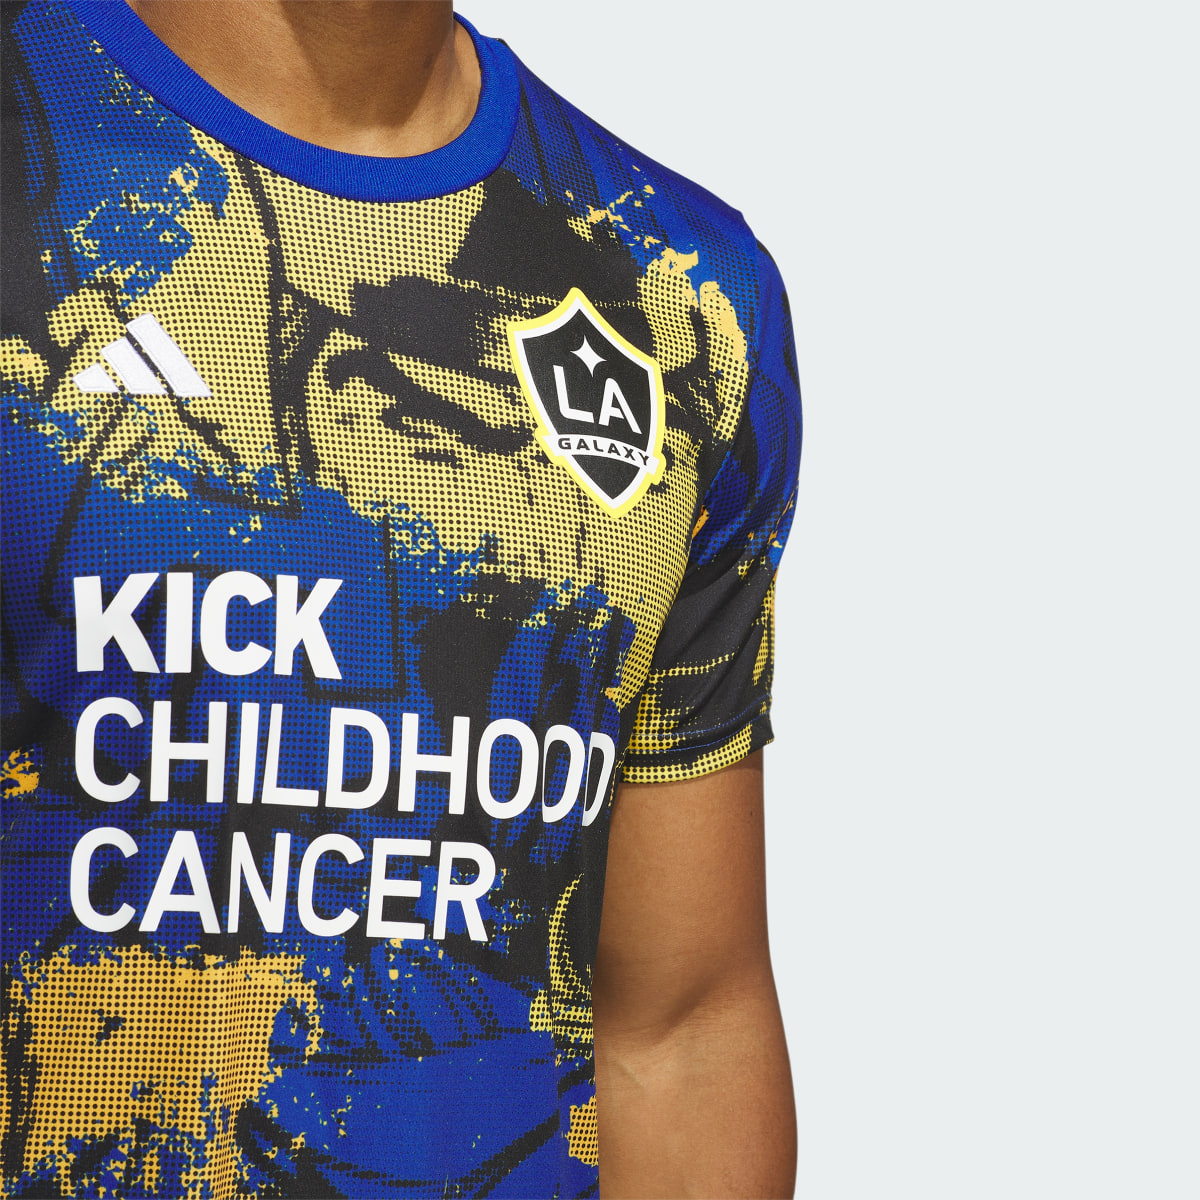 Adidas Los Angeles Galaxy Marvel MLS Kick Childhood Cancer Pre-Match Jersey. 7